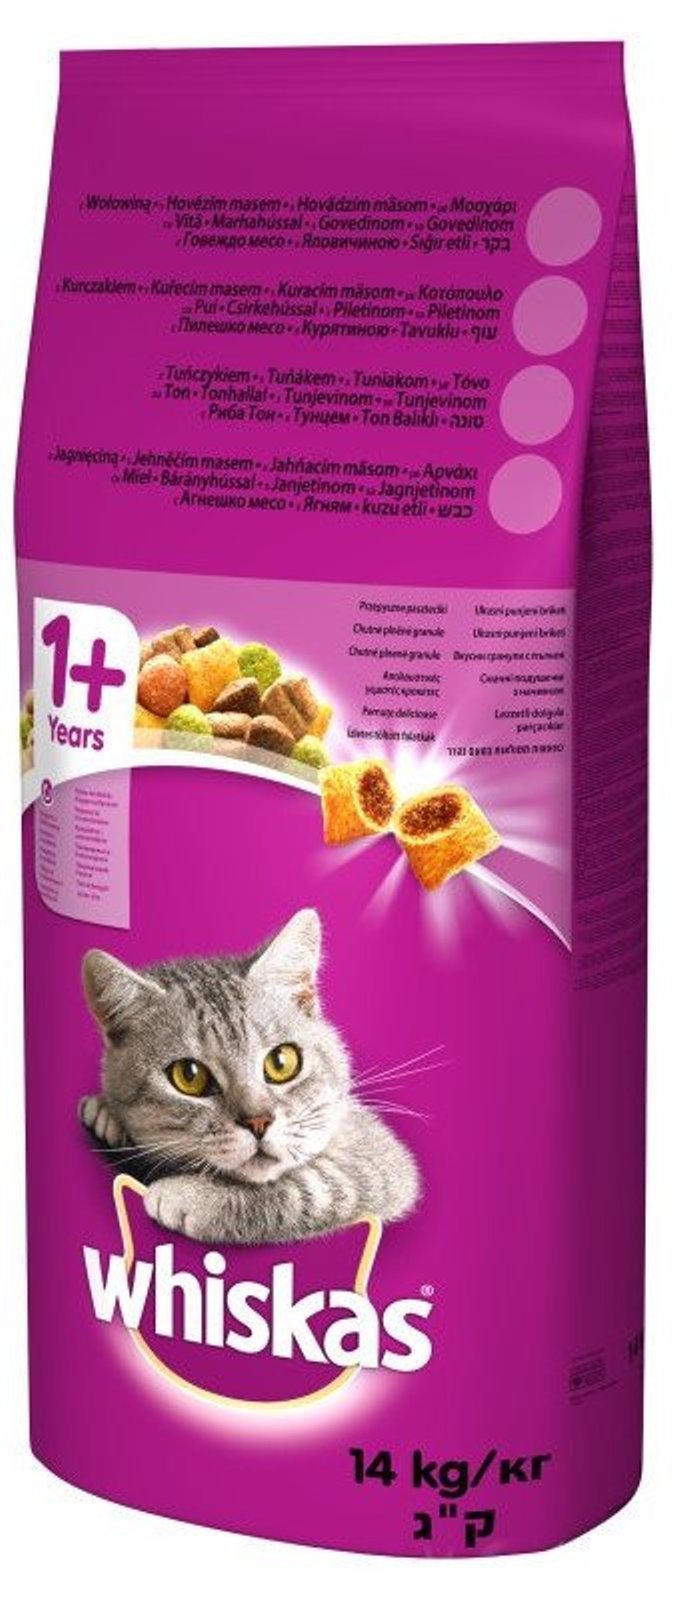 | - Katzenfutter 14kg Online-Zoohandlung Tuna ZooLand.com.de WHISKAS